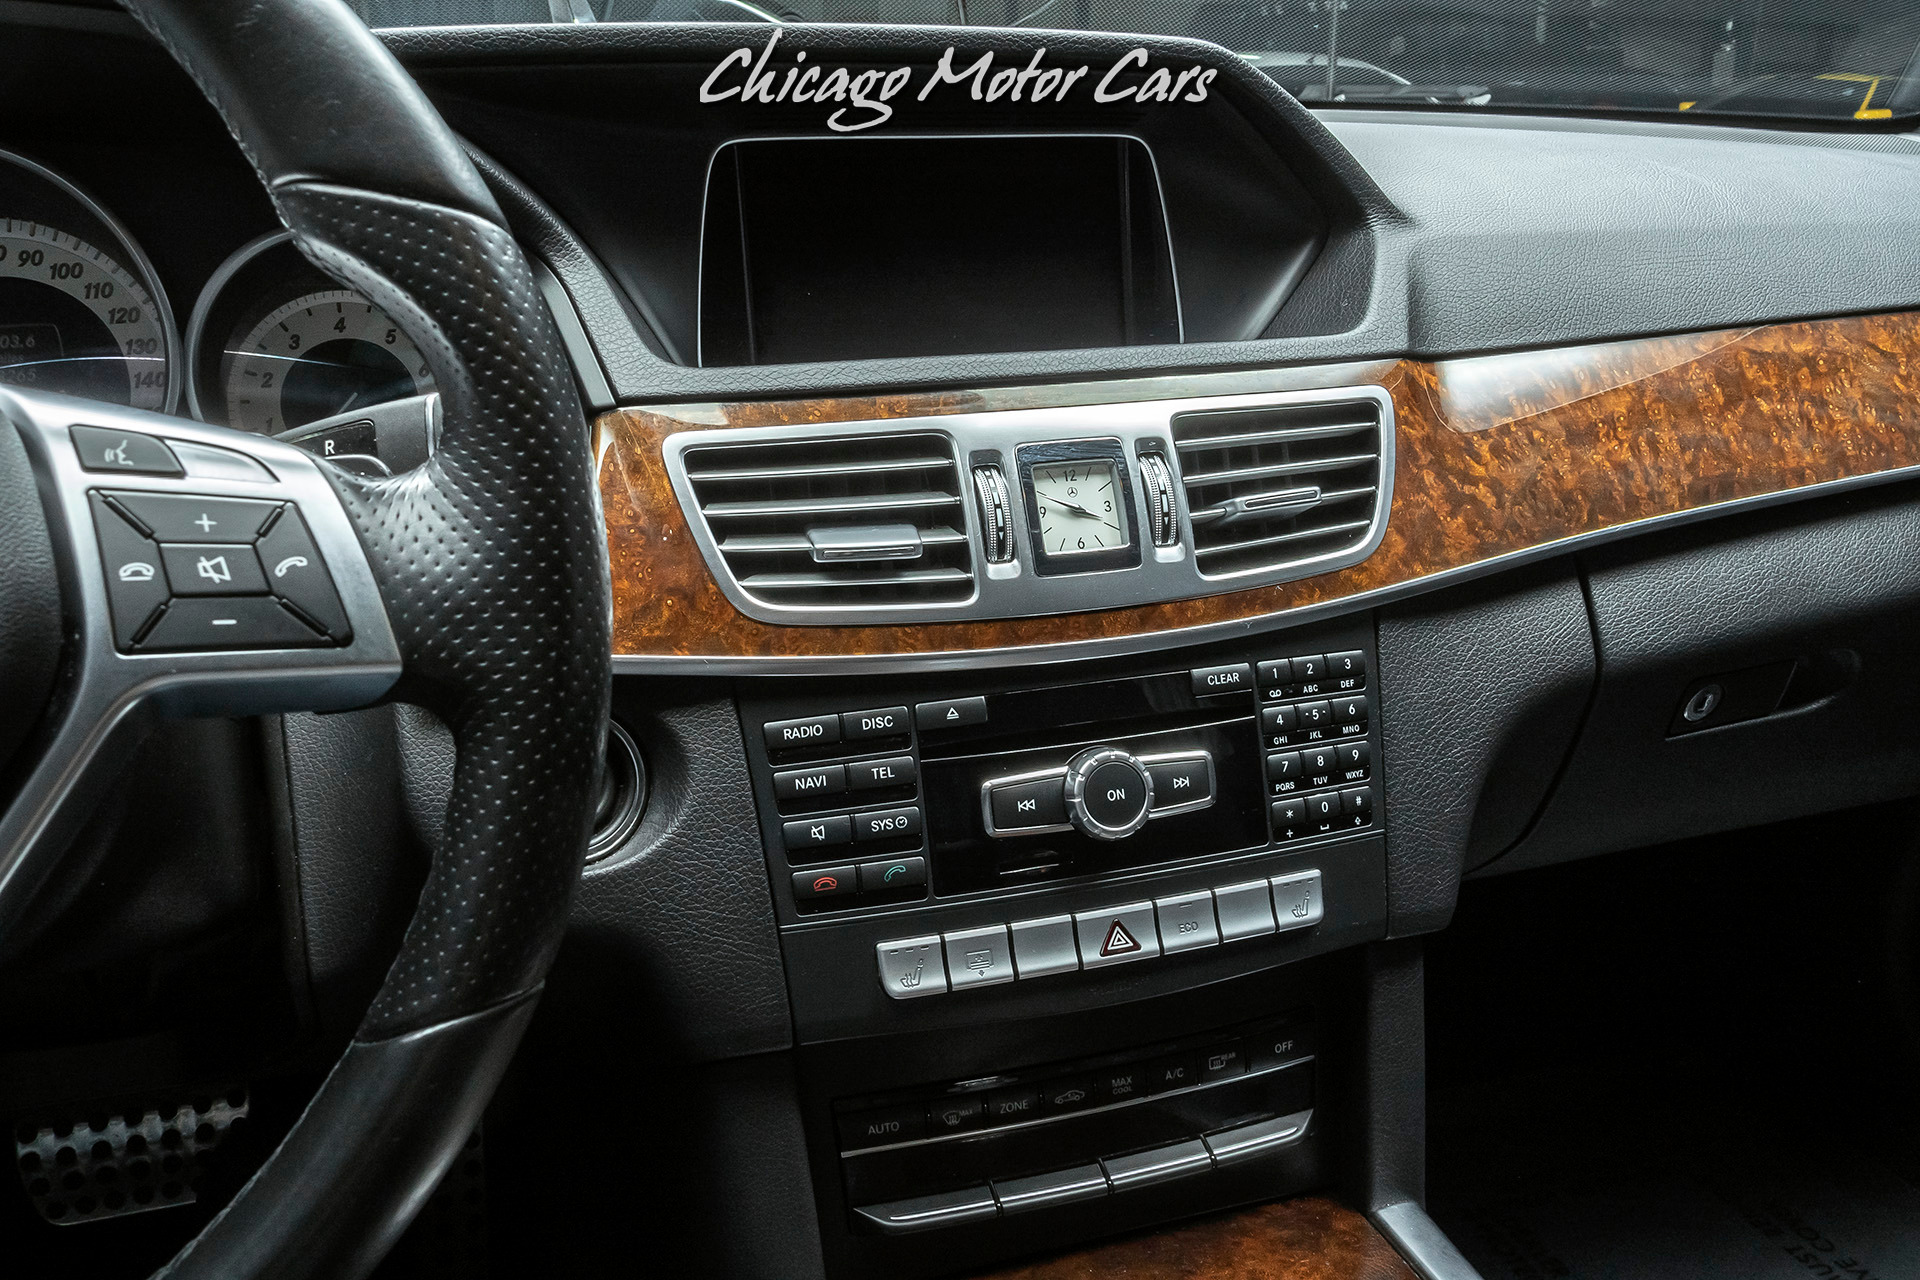 Used-2015-Mercedes-Benz-E350-4-Matic-Sedan-MSRP-64k-PREMIUM-1-PACKAGE